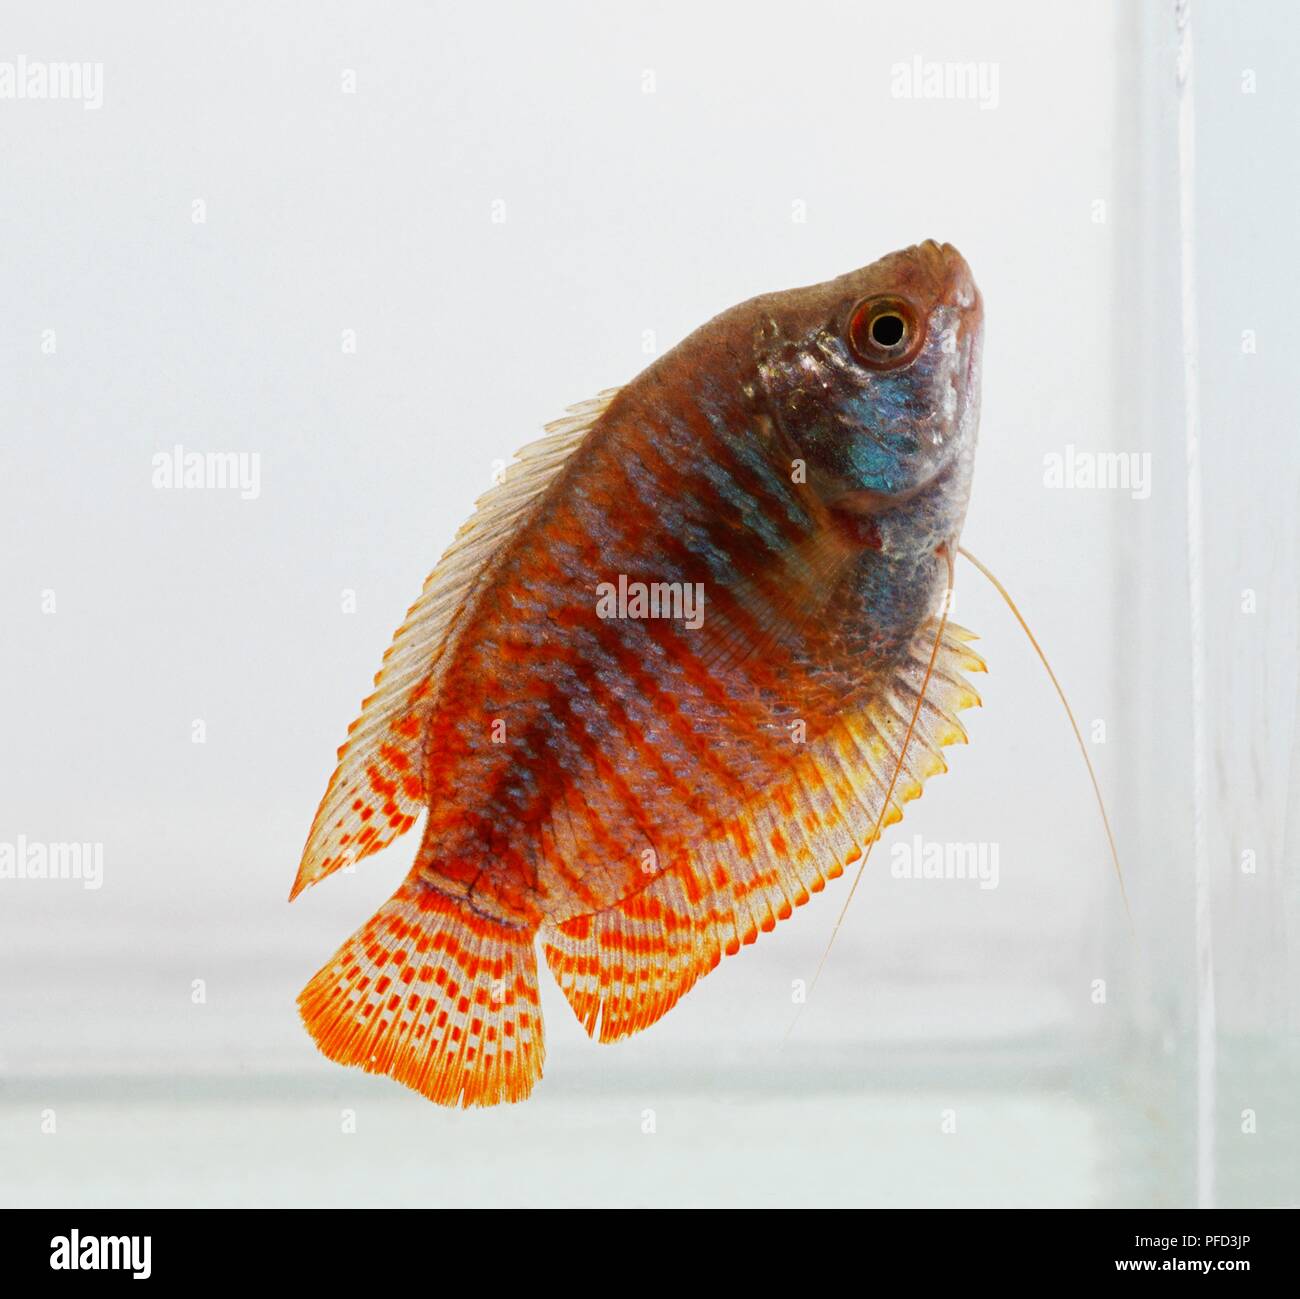 Dwarf gourami (Colisa lalia), orange fish, male, side view Stock Photo